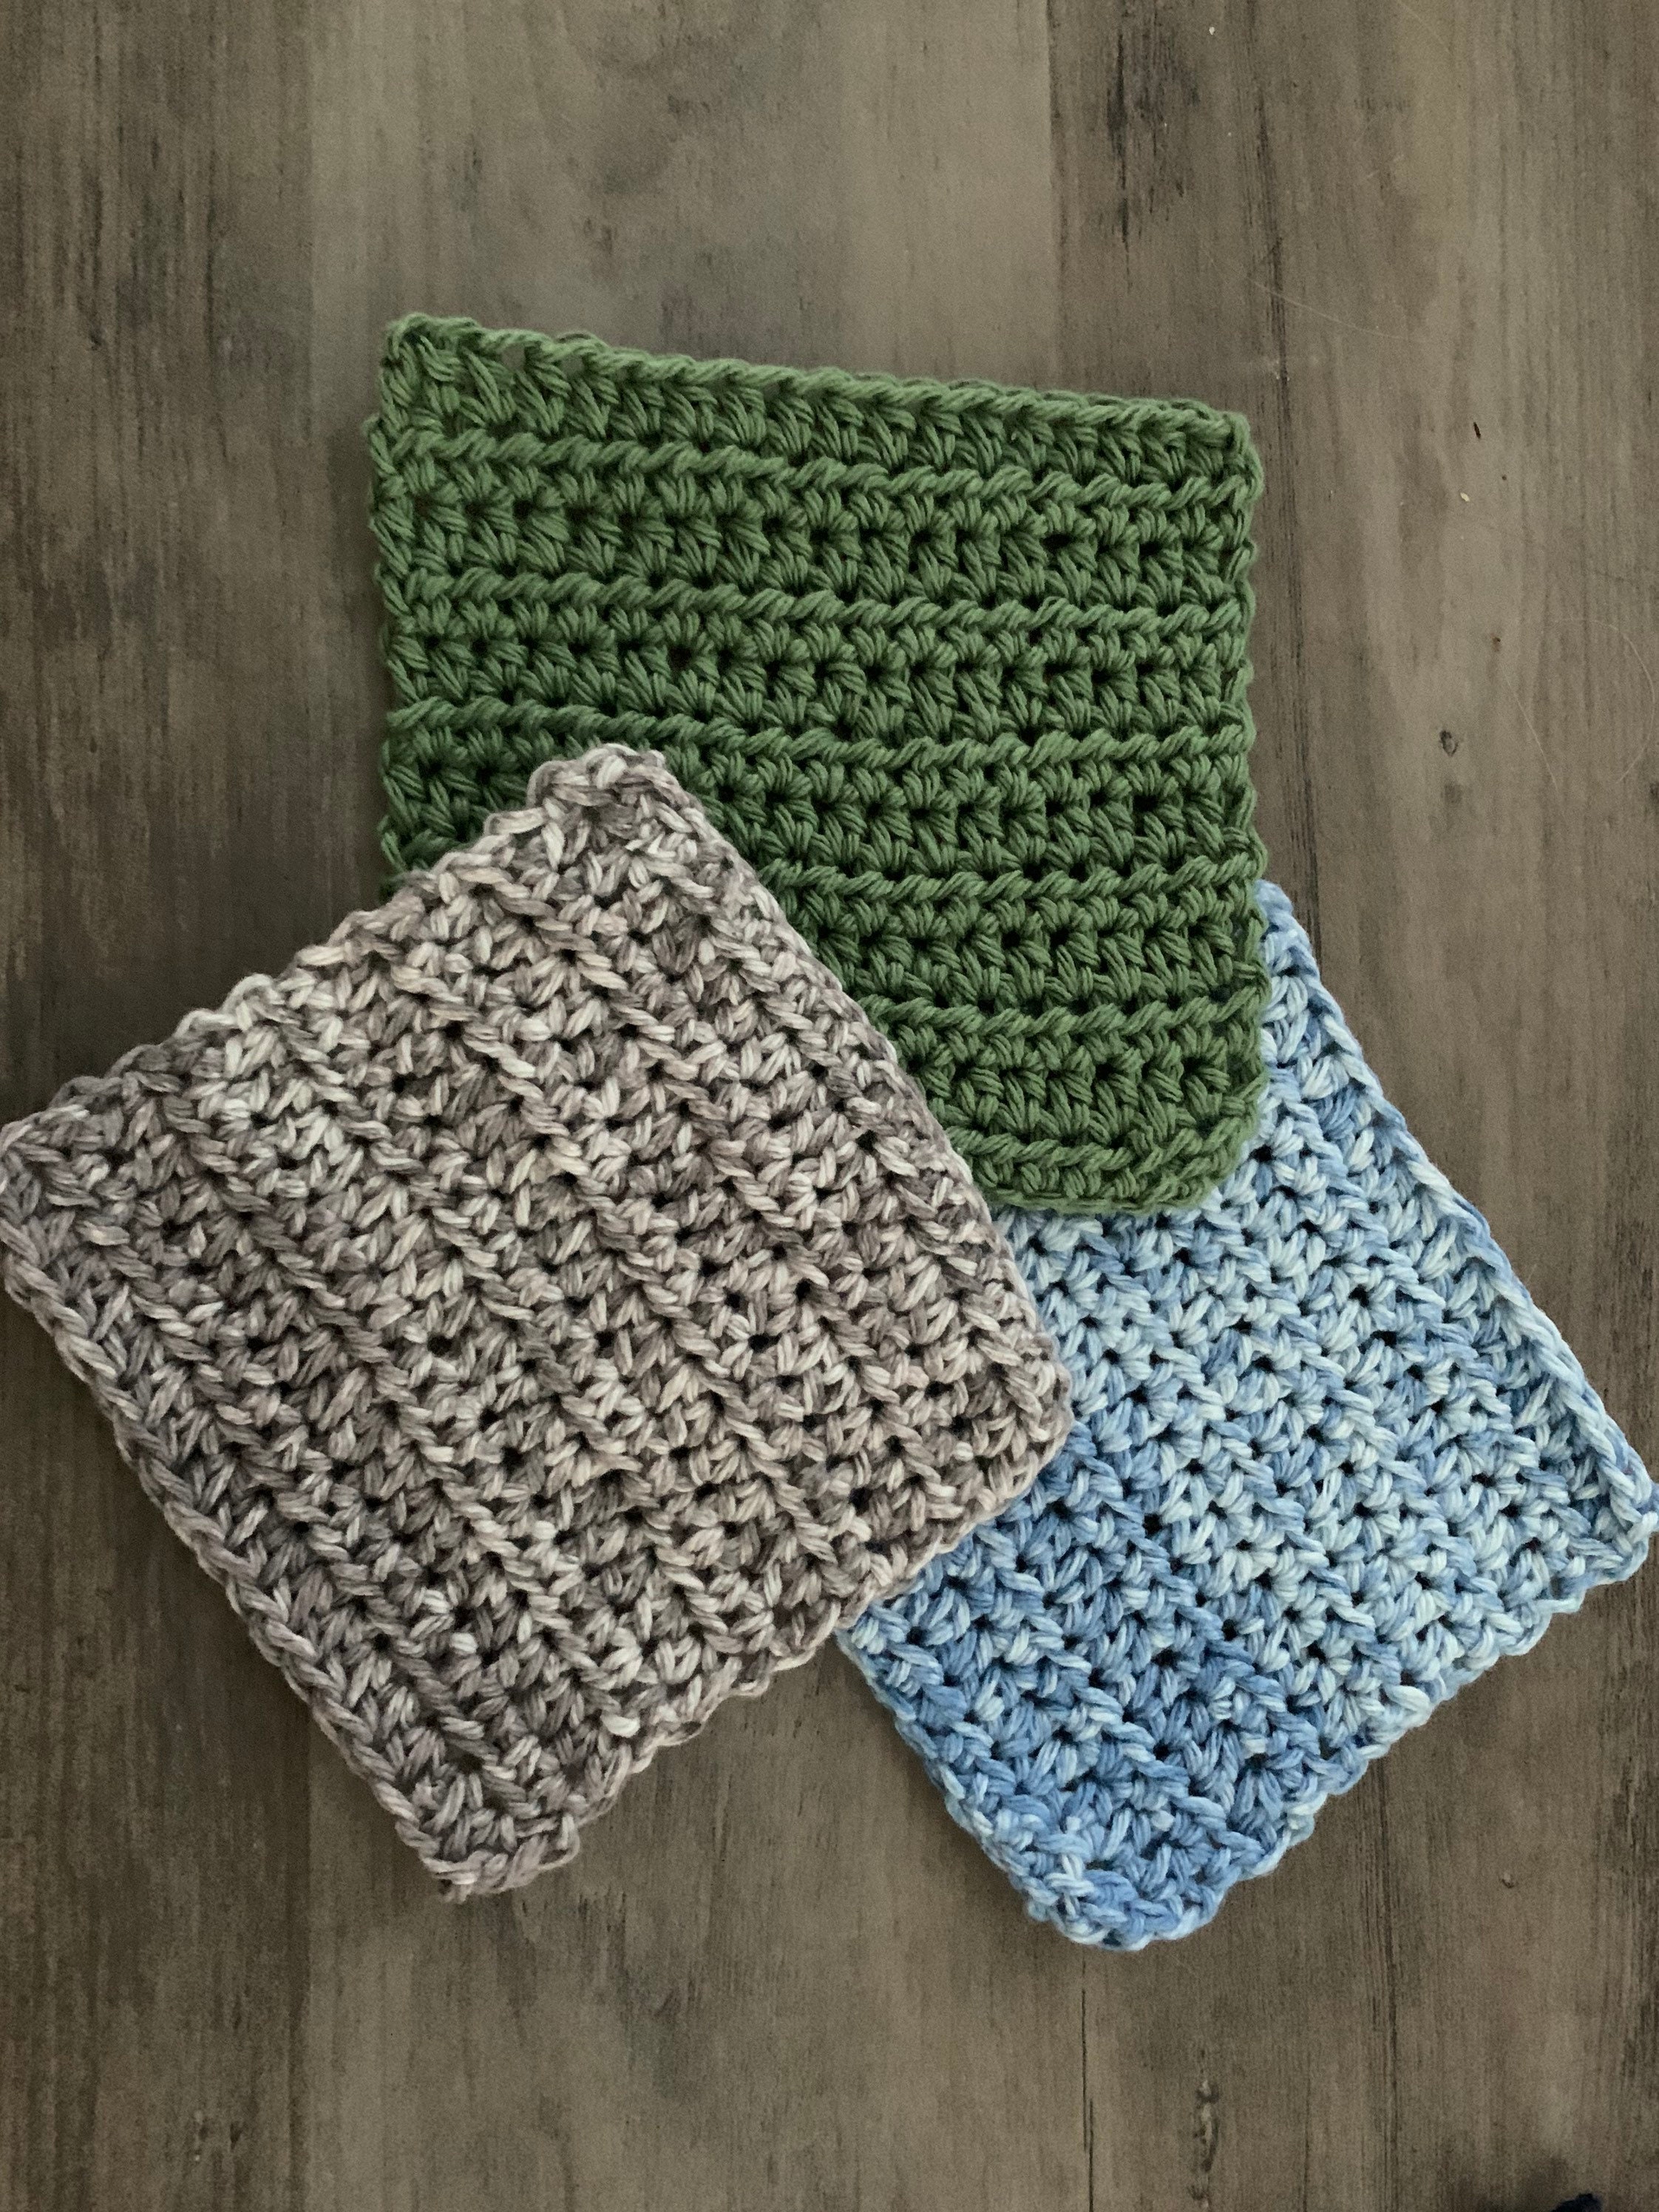 Crochet Square Coasters Set of 4 | Etsy